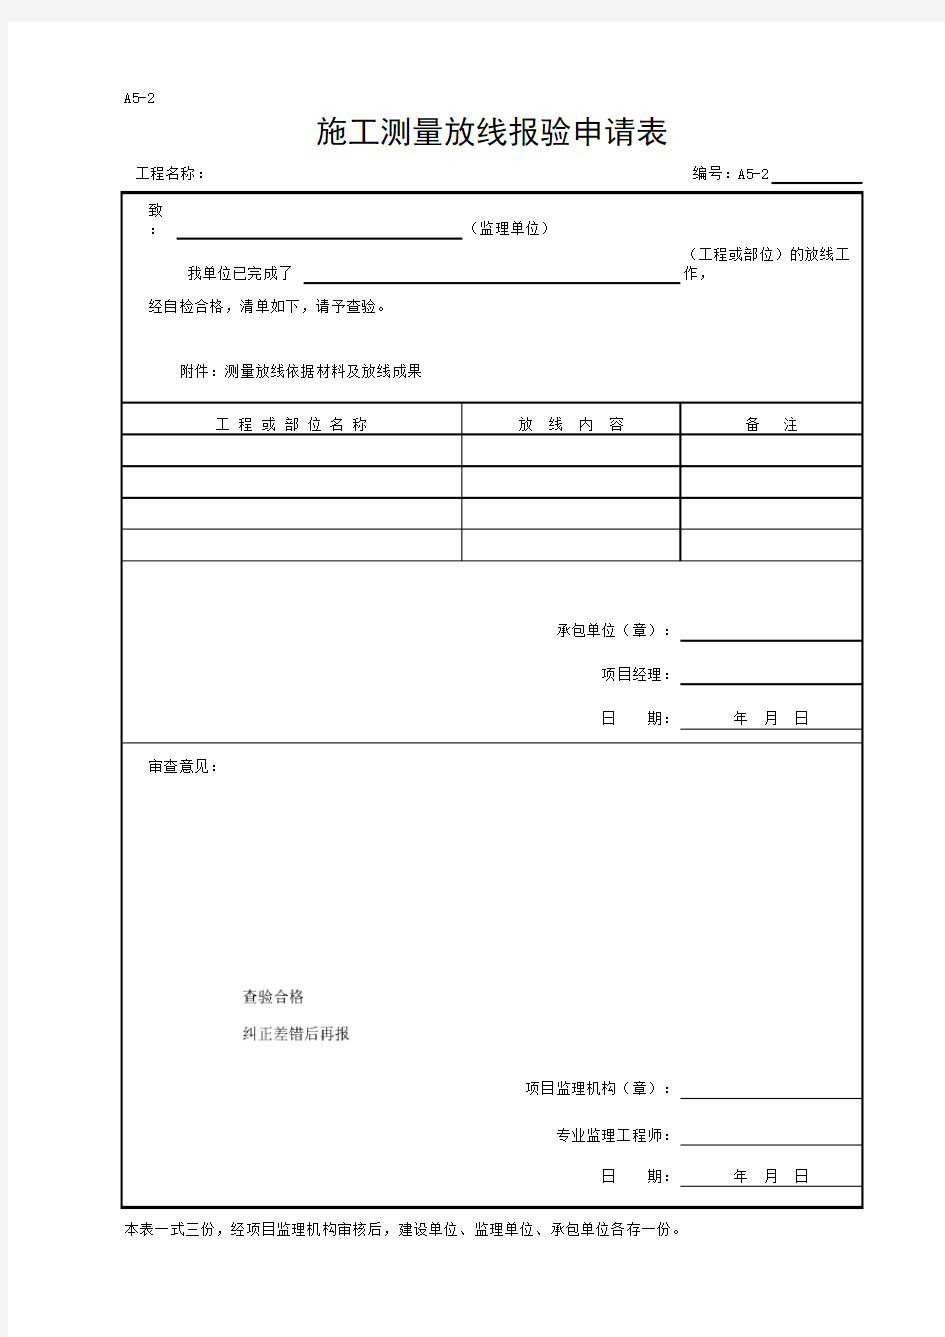 001-A5-2 施工测量放线报验申请表